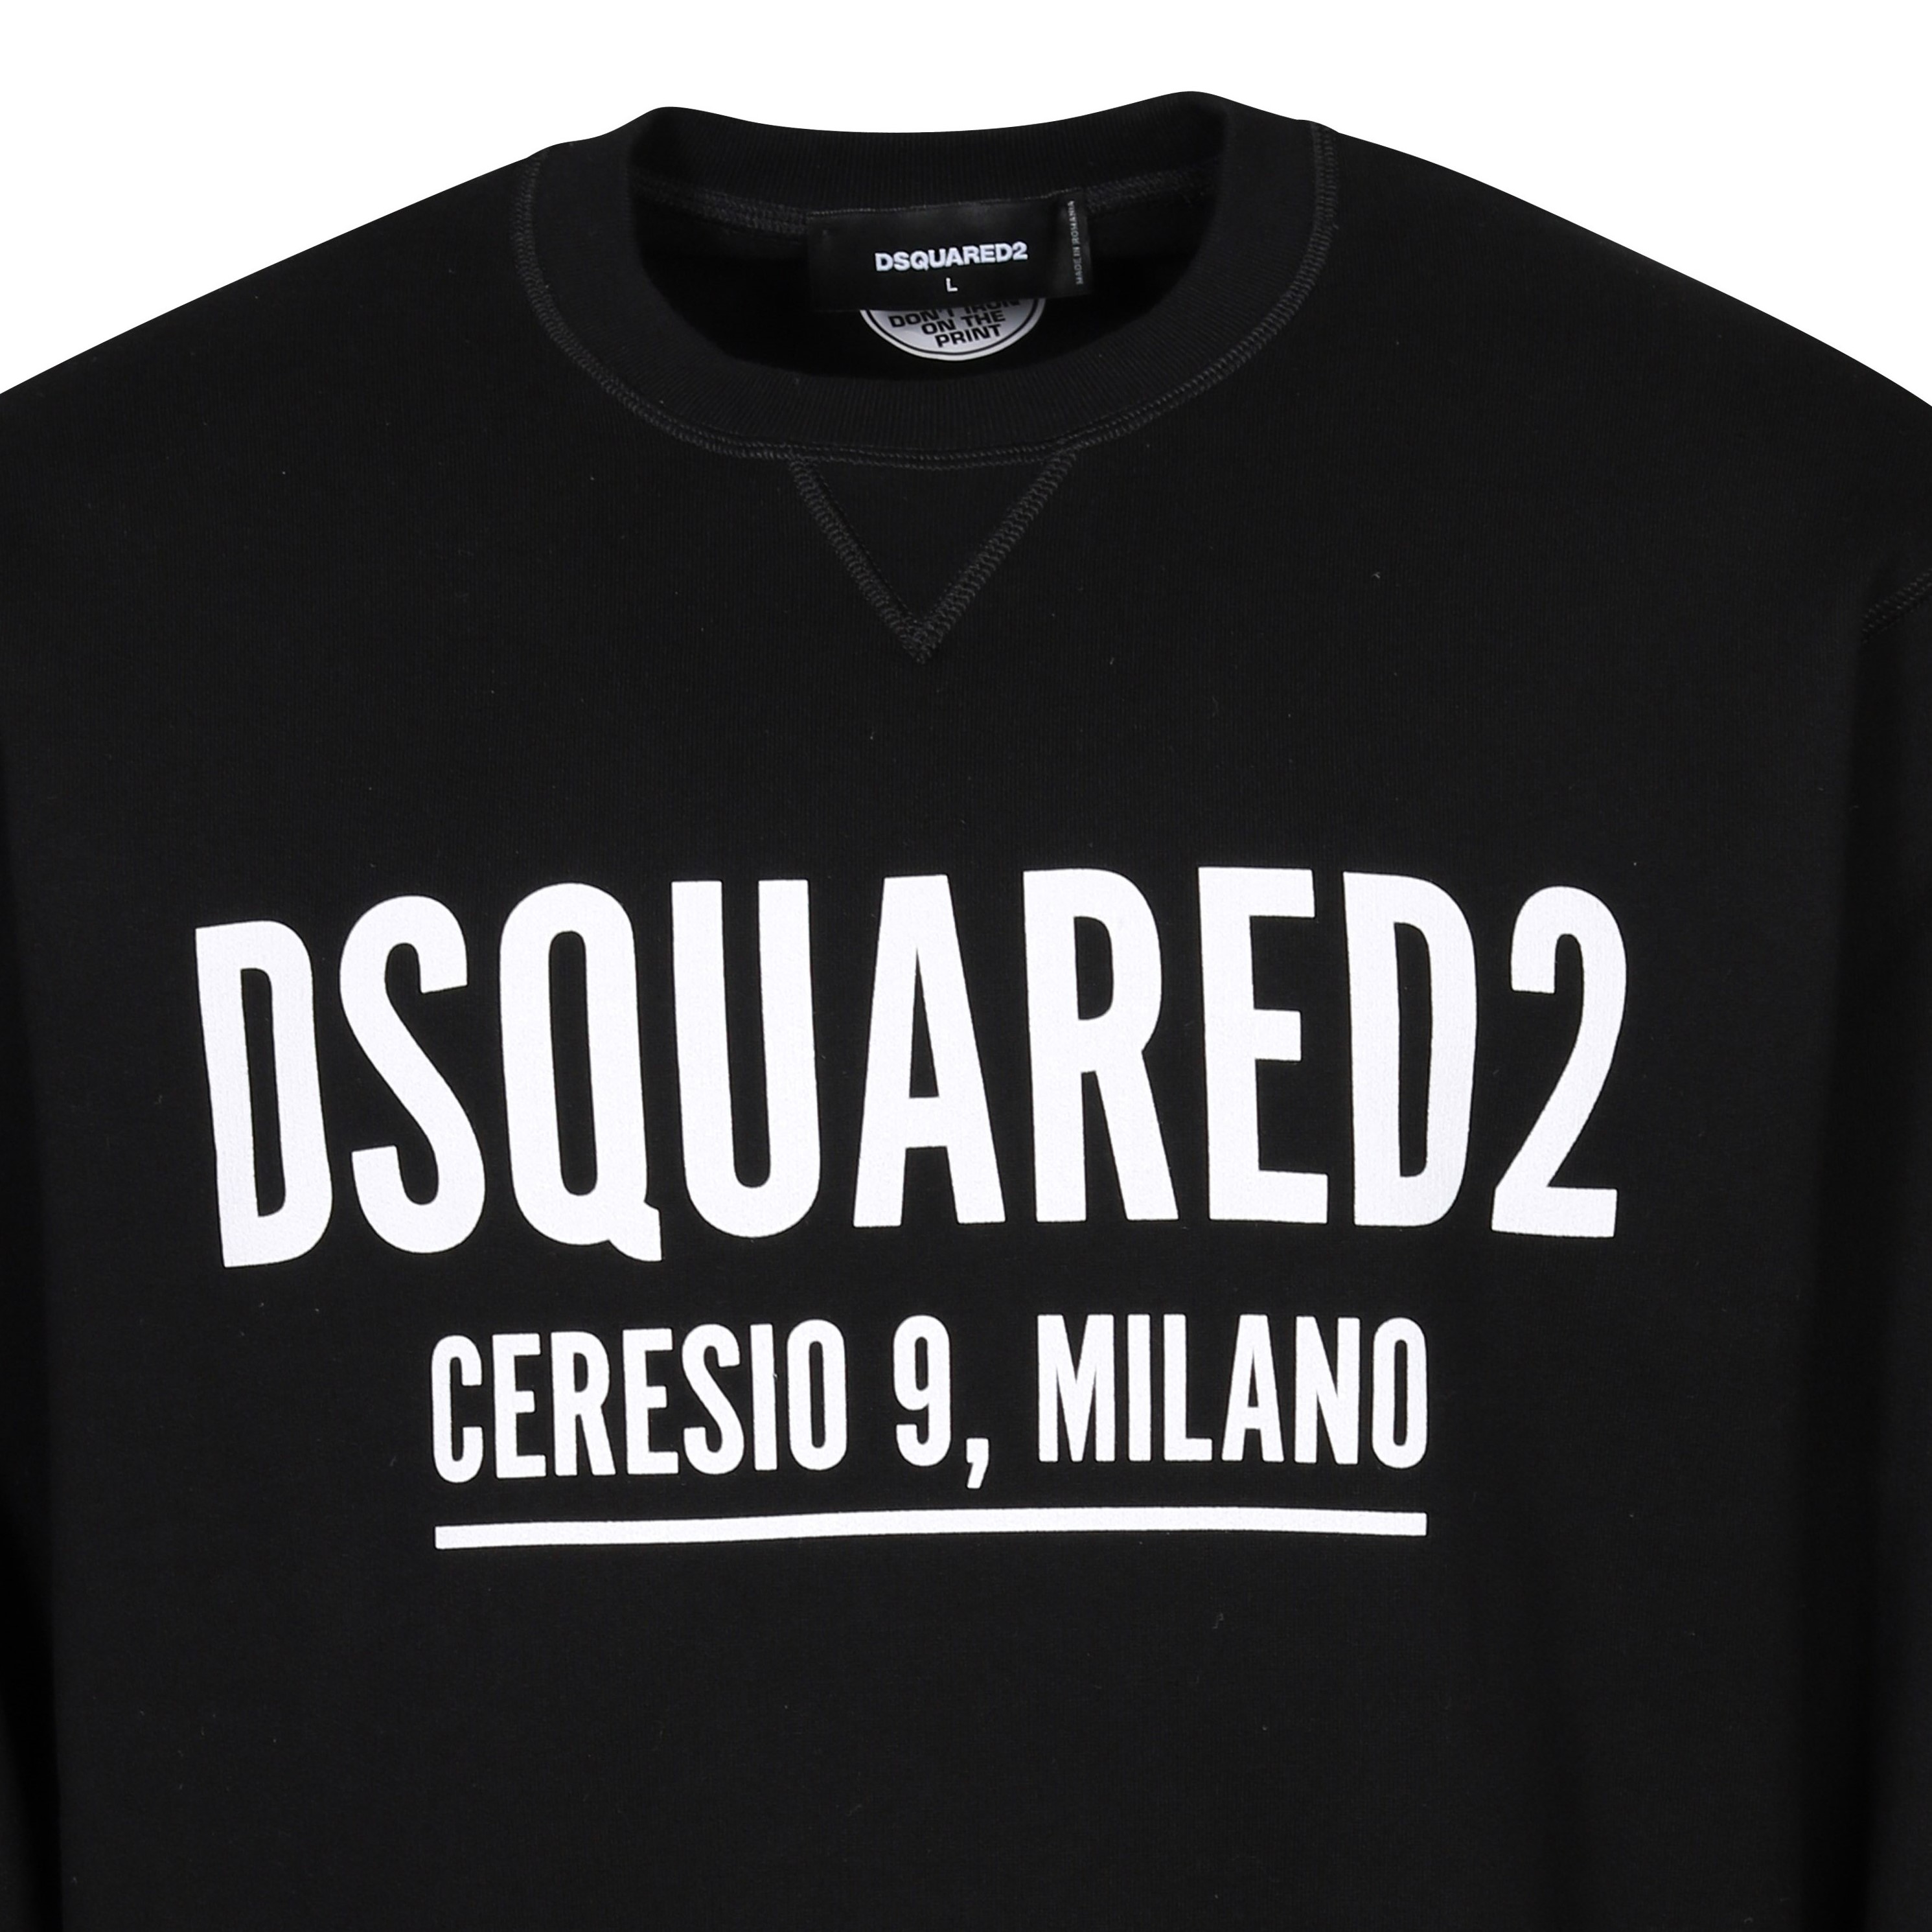 Dsquared Ceresio 9 Cool Sweater in Black